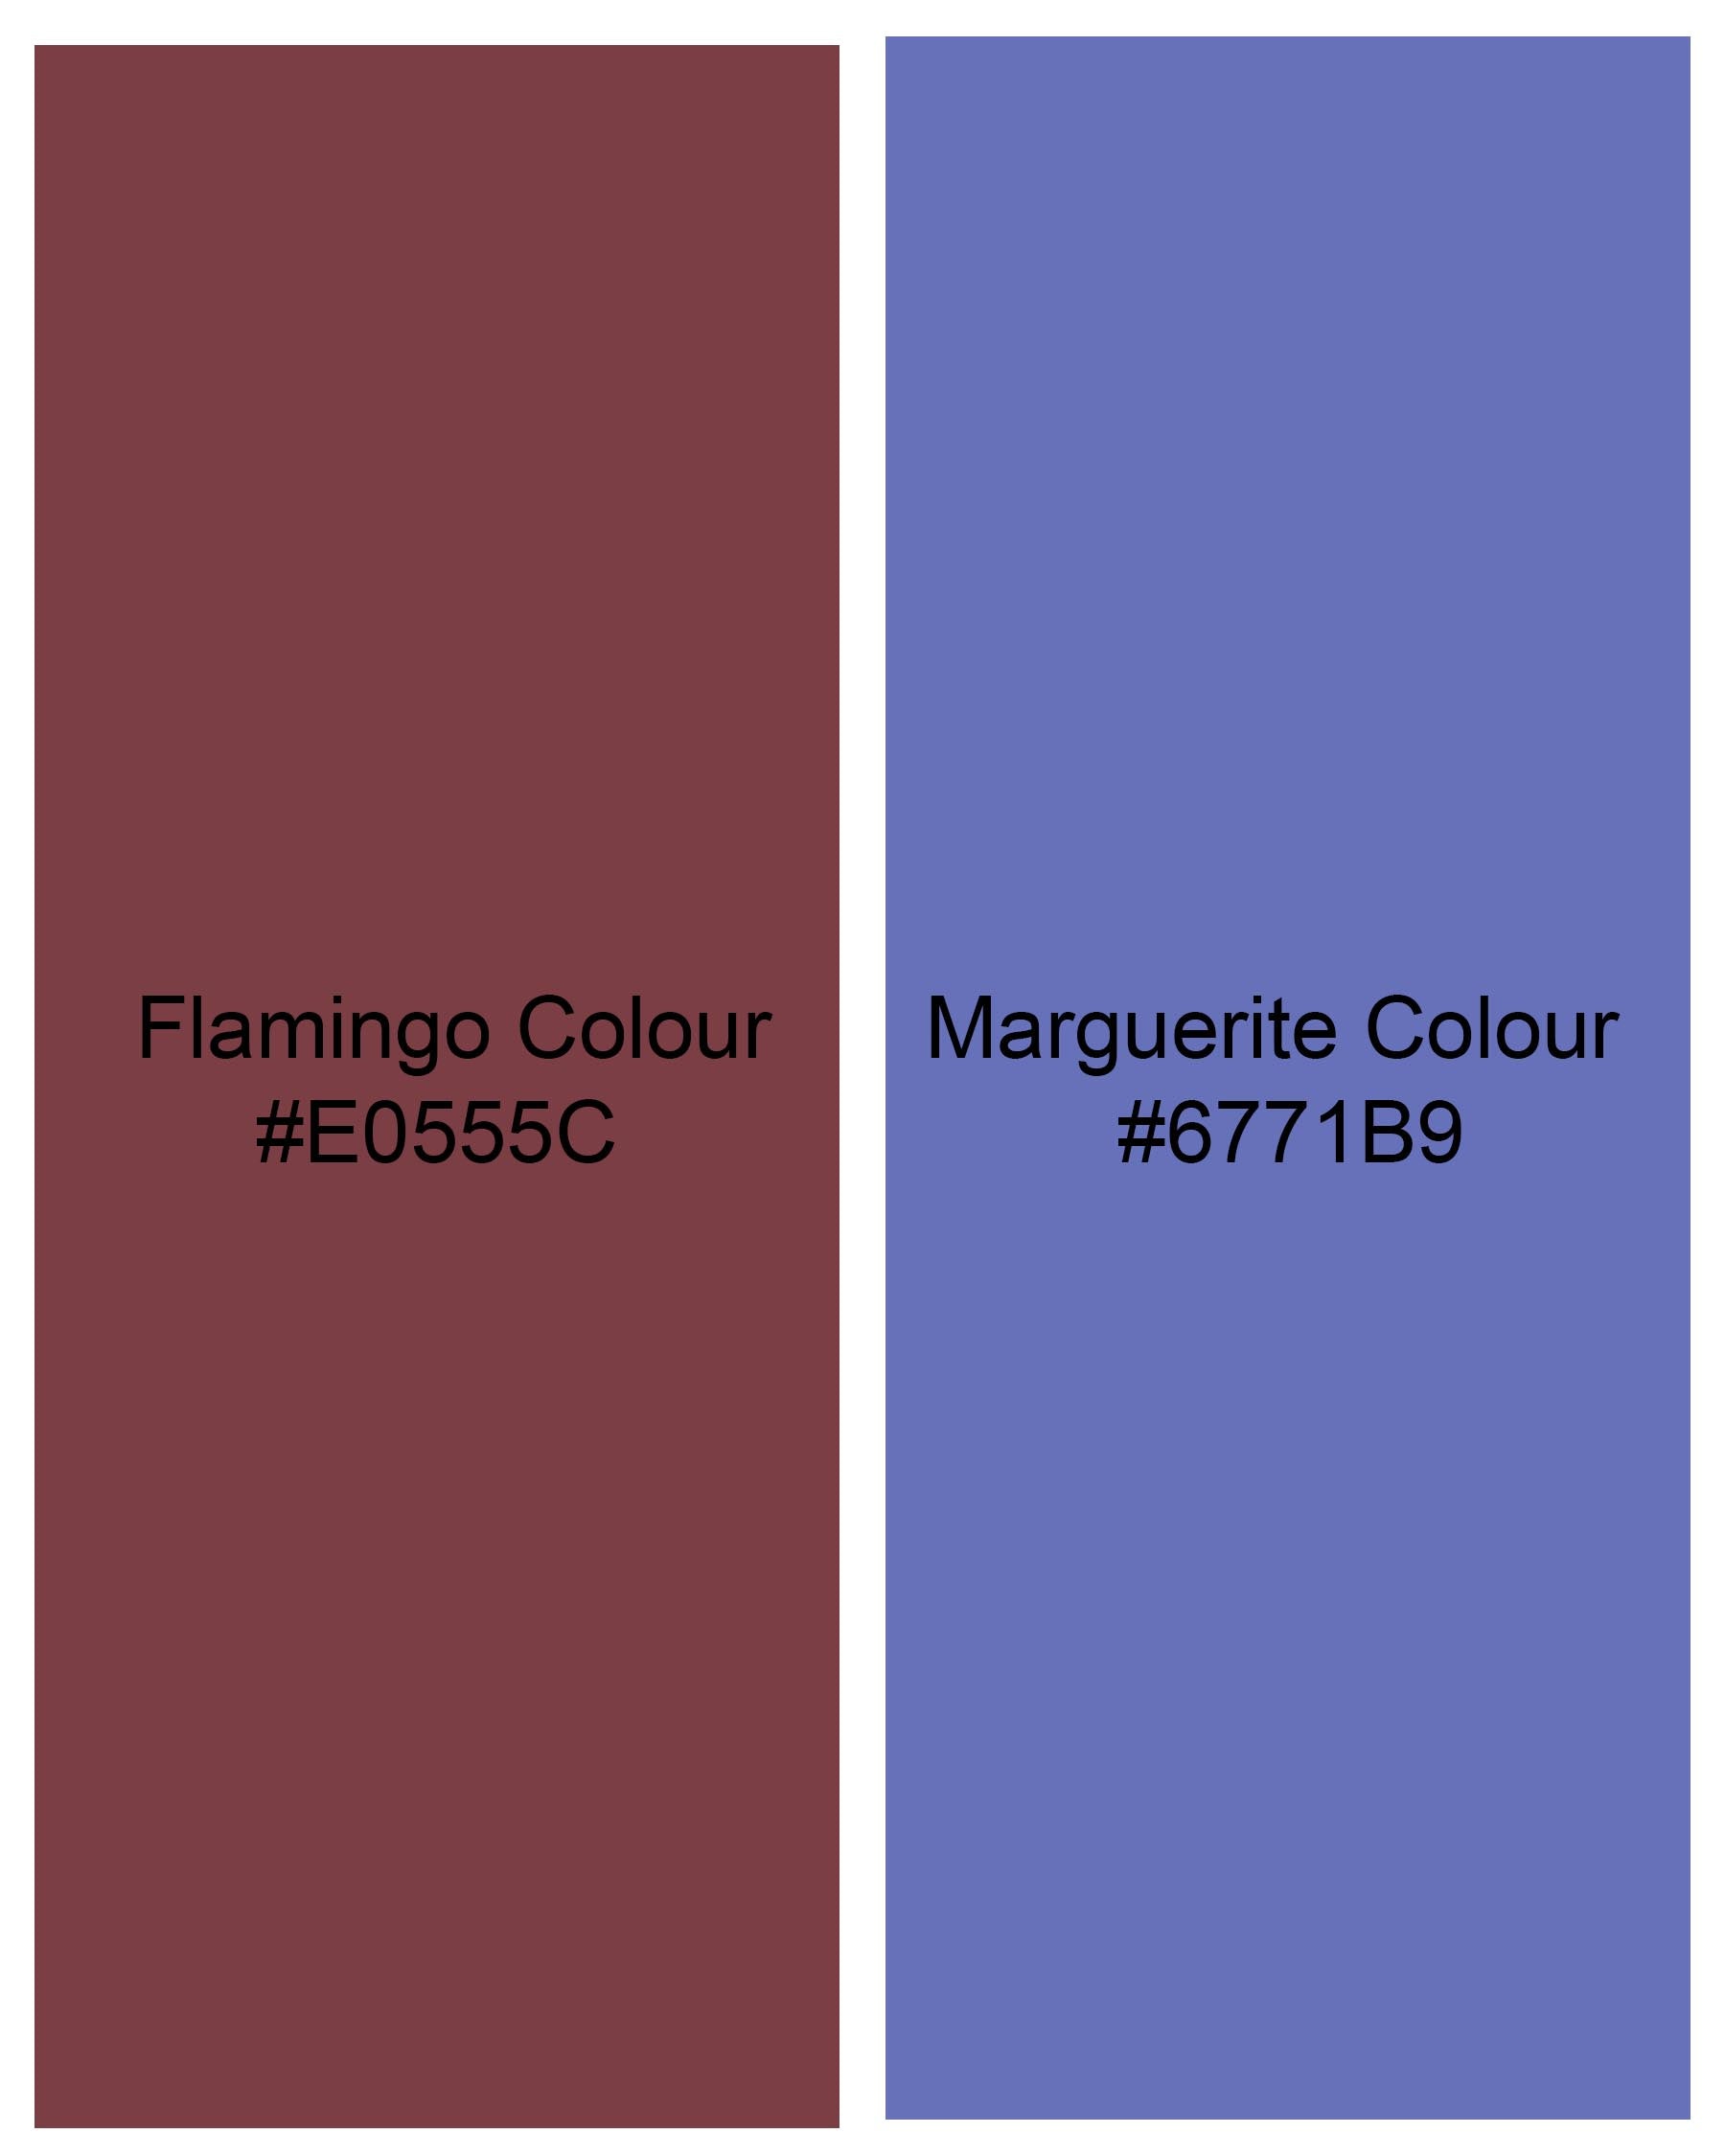 Marguerite Blue and Flamingo Brown Dobby Textured Premium Giza Cotton Designer Shirt 7795-P146-38,7795-P146-38,7795-P146-39,7795-P146-39,7795-P146-40,7795-P146-40,7795-P146-42,7795-P146-42,7795-P146-44,7795-P146-44,7795-P146-46,7795-P146-46,7795-P146-48,7795-P146-48,7795-P146-50,7795-P146-50,7795-P146-52,7795-P146-52